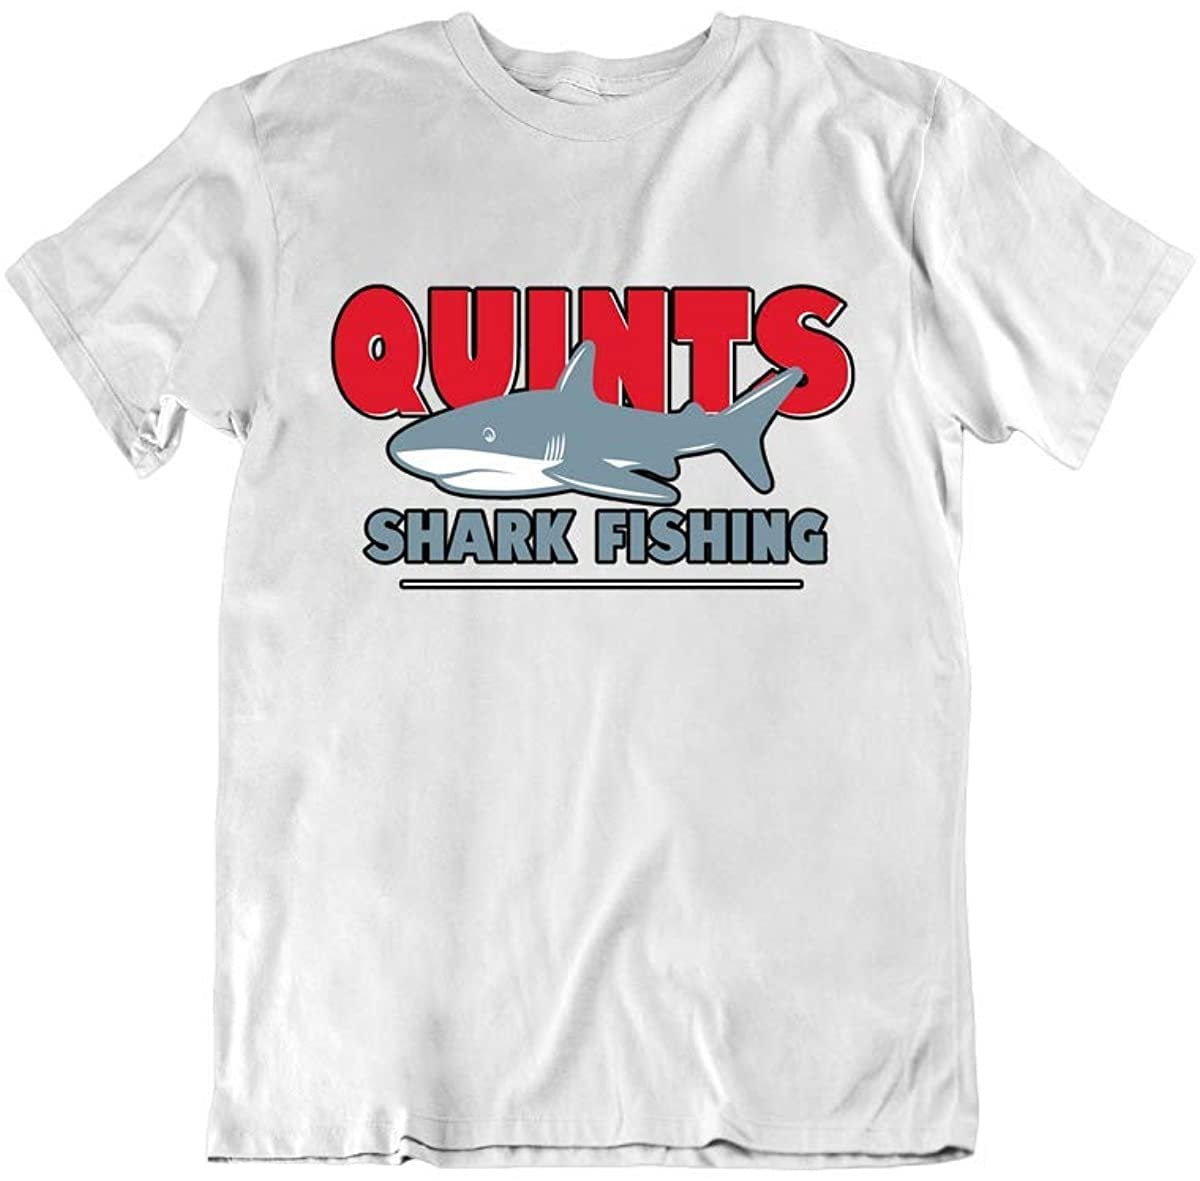 Quints Shark Fishing Funny Novelty Humor Fashion Design Cotton T-Shirt  White 